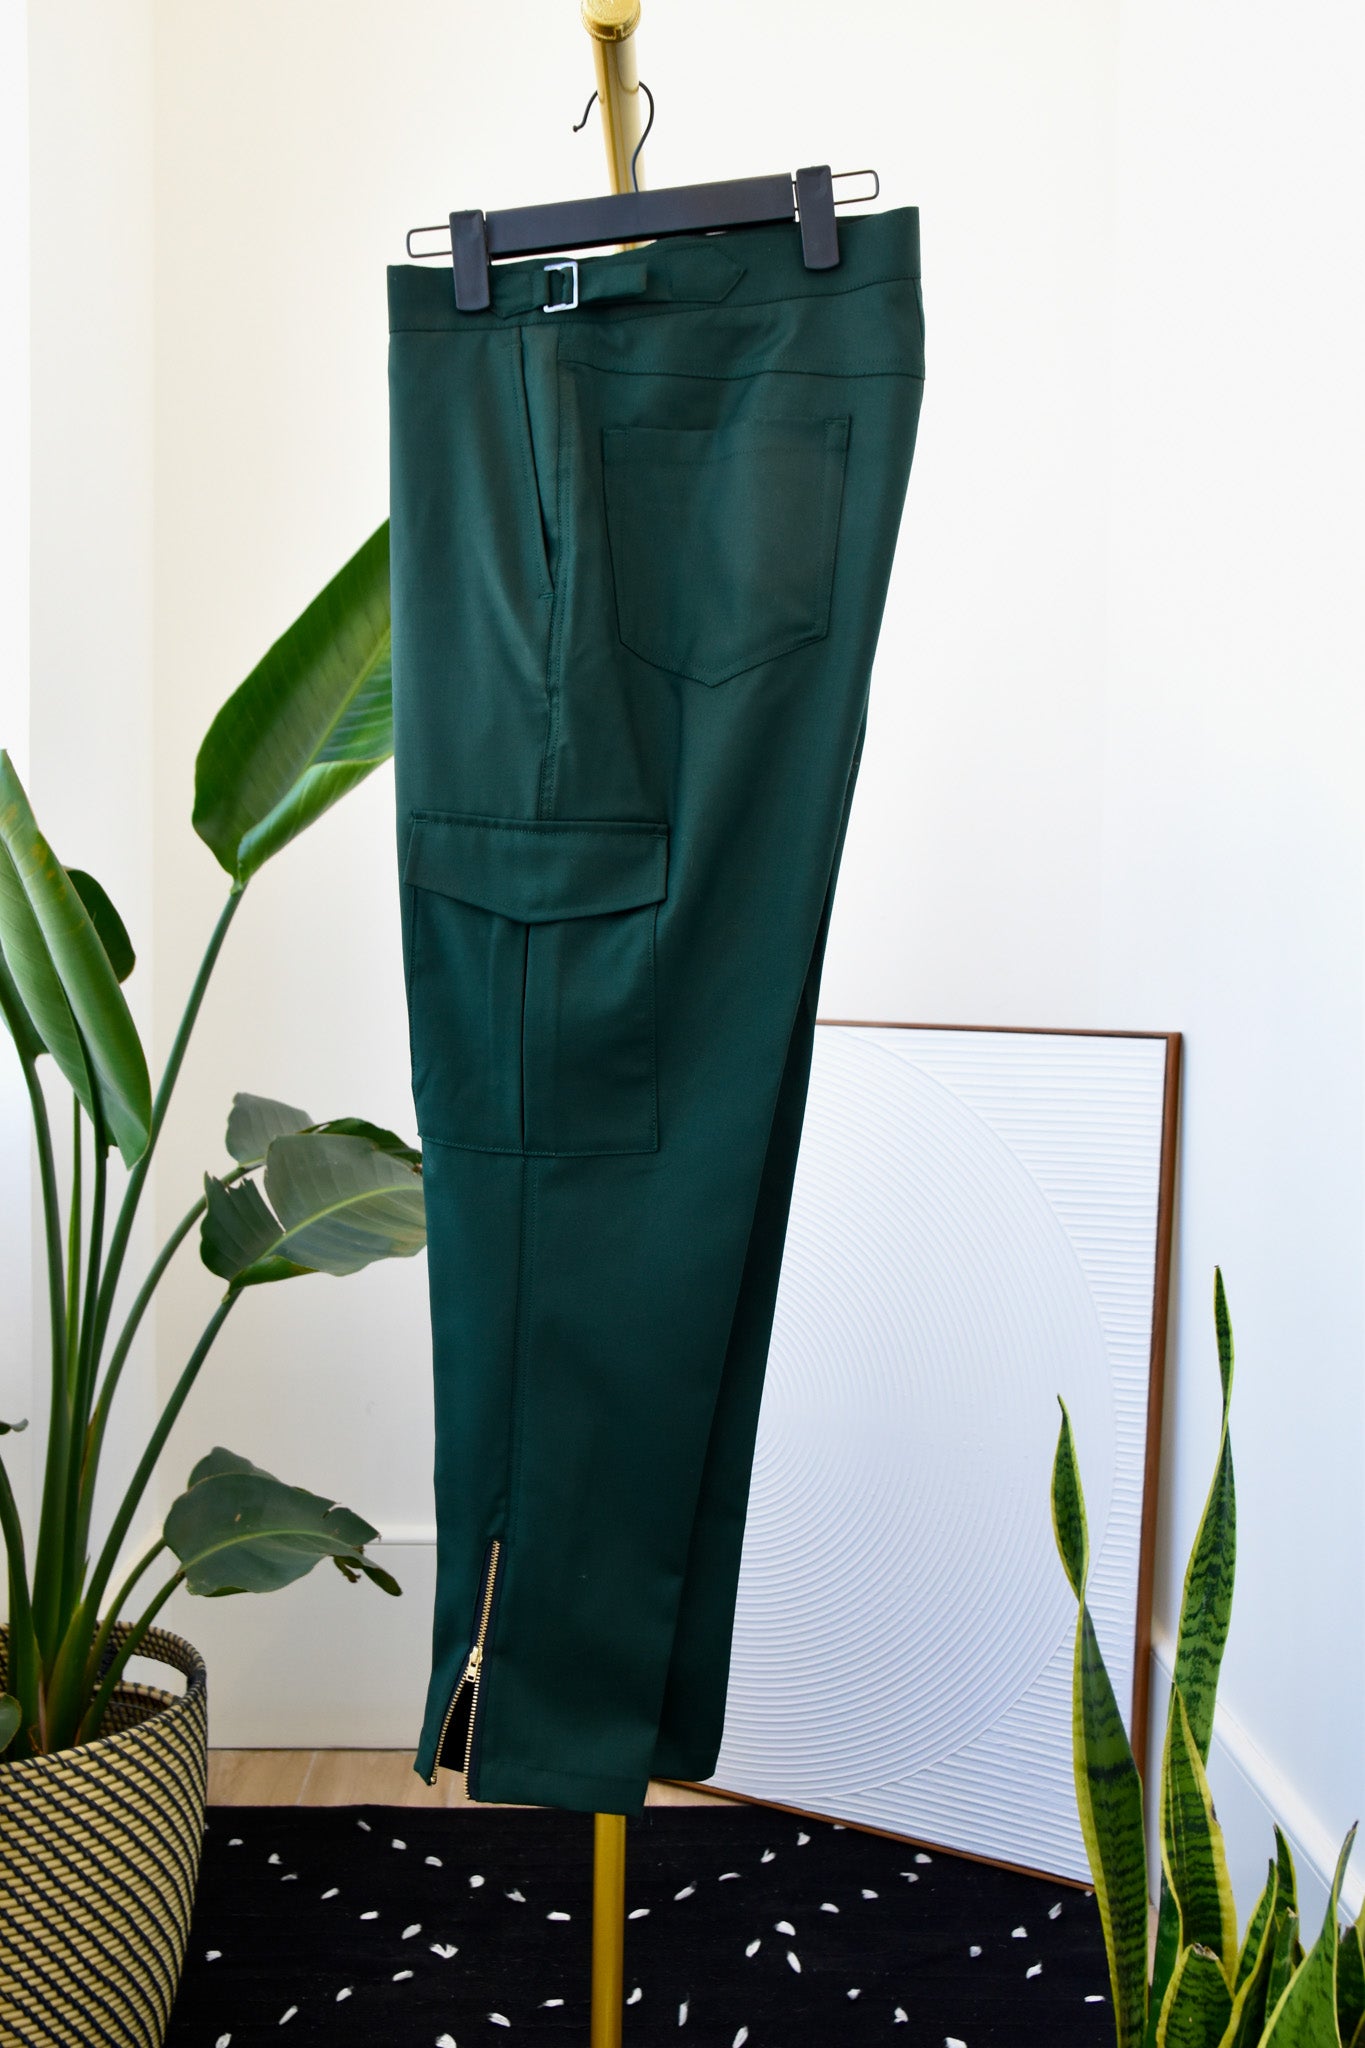 Damari x MSP - Midnight Green Cargo Pants